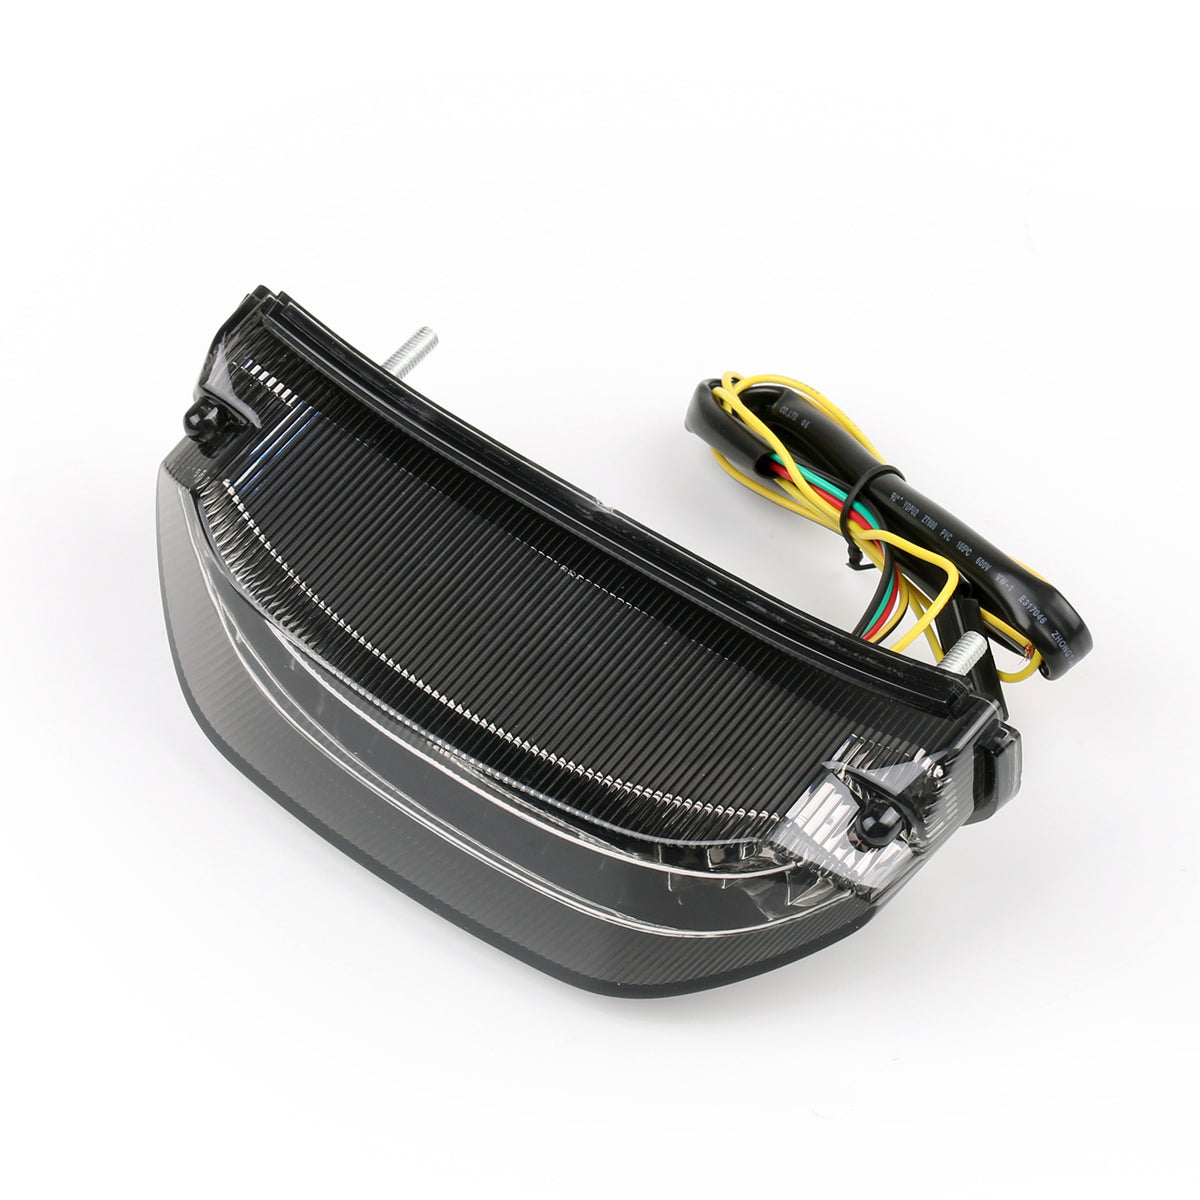 Indicatori di direzione fanali posteriori a LED integrati per Honda CBR600RR 2013-2014 Trasparente